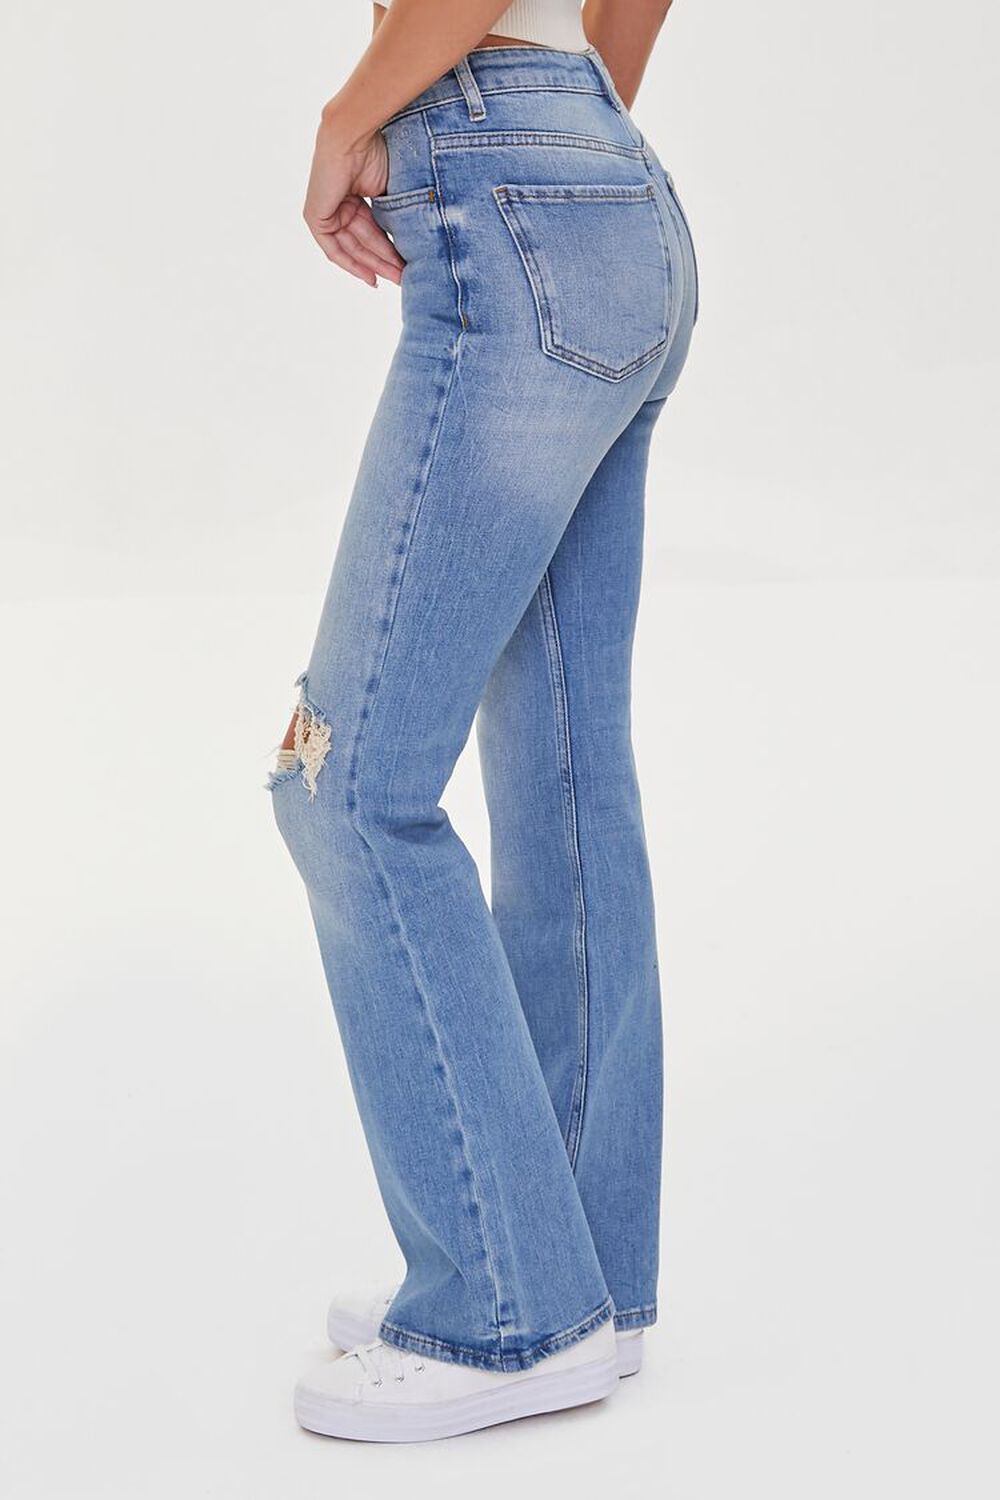 Hemp 4% High-Rise Flare Jeans, image 3